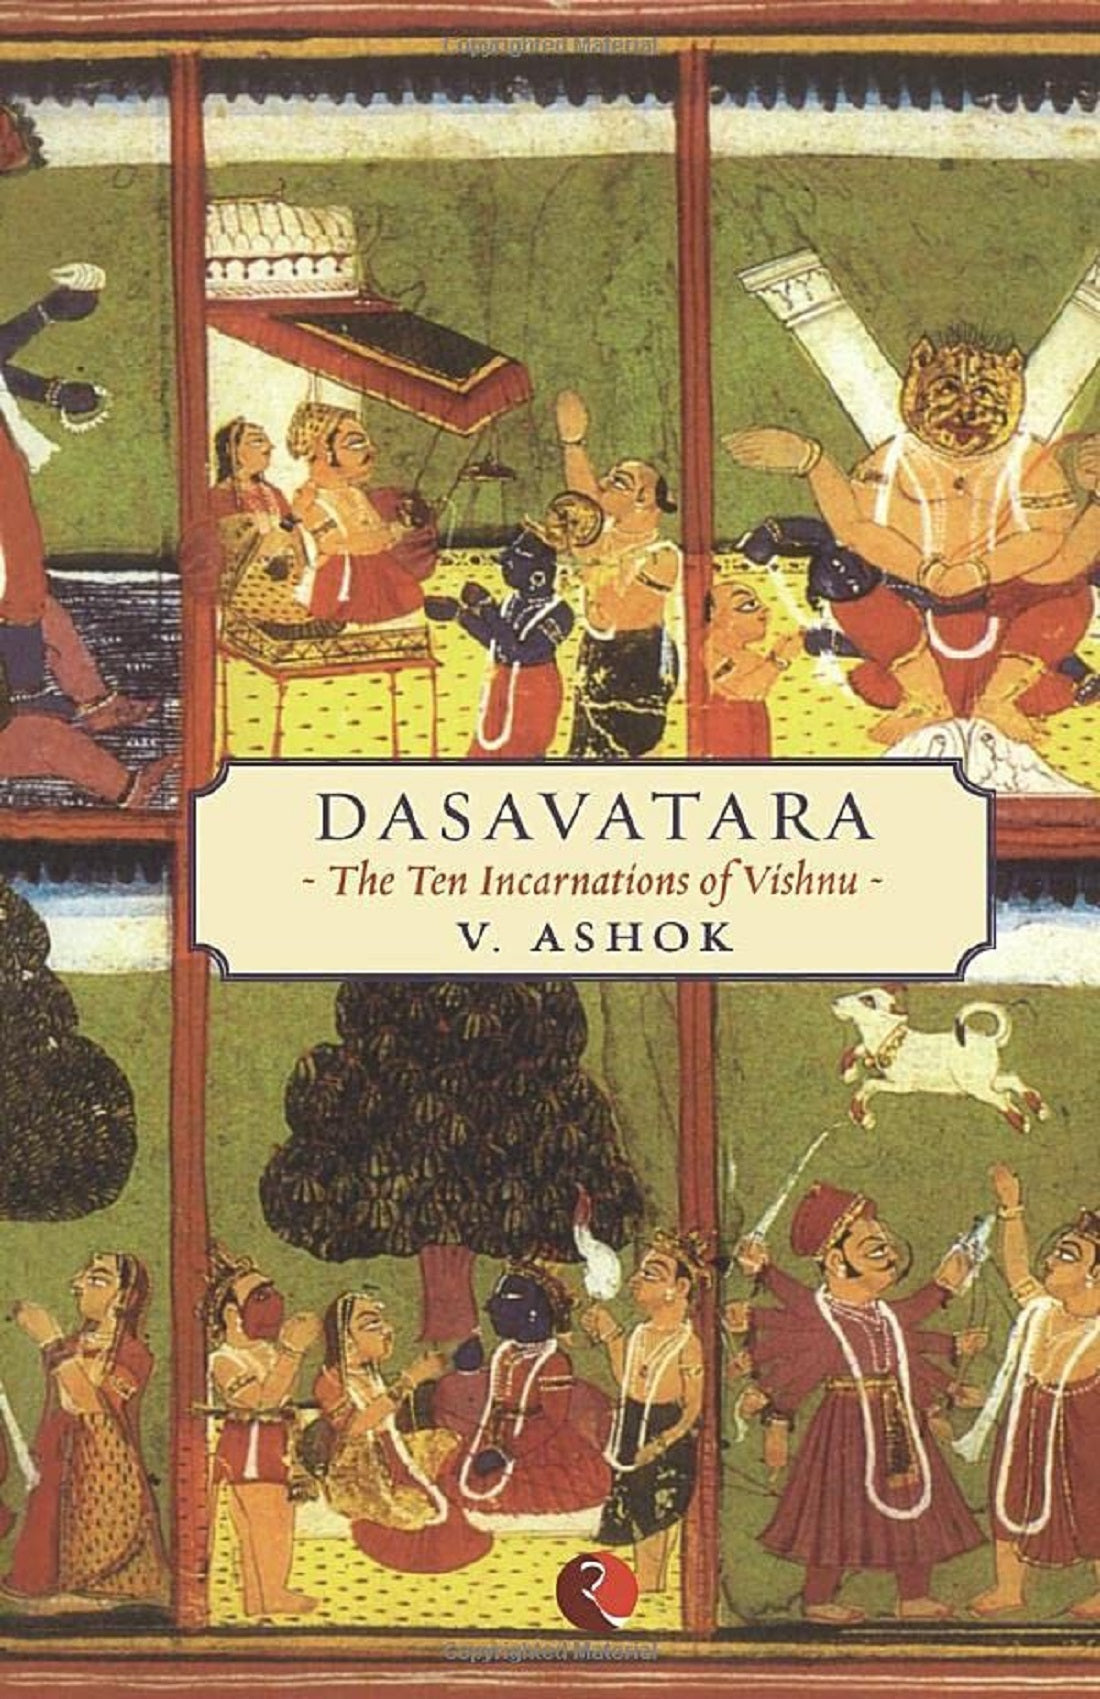 DASAVATARA THE TEN INCARNATIONS OF VISHNU